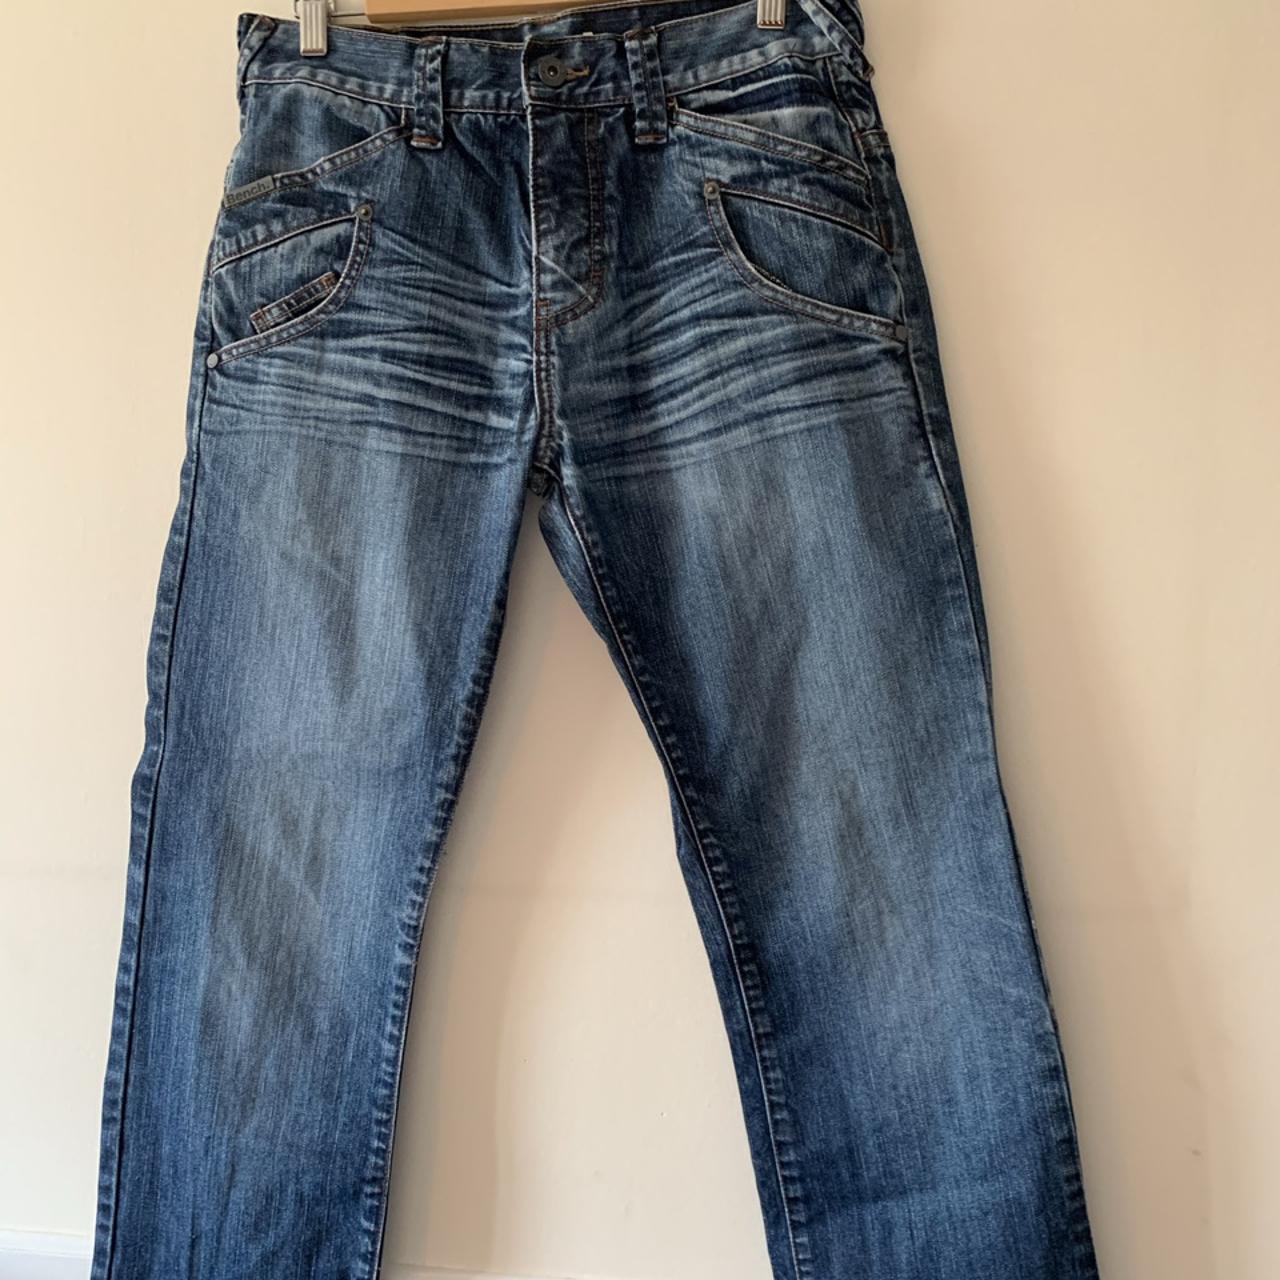 Bench denim jeans - 30R. Good condition - Depop